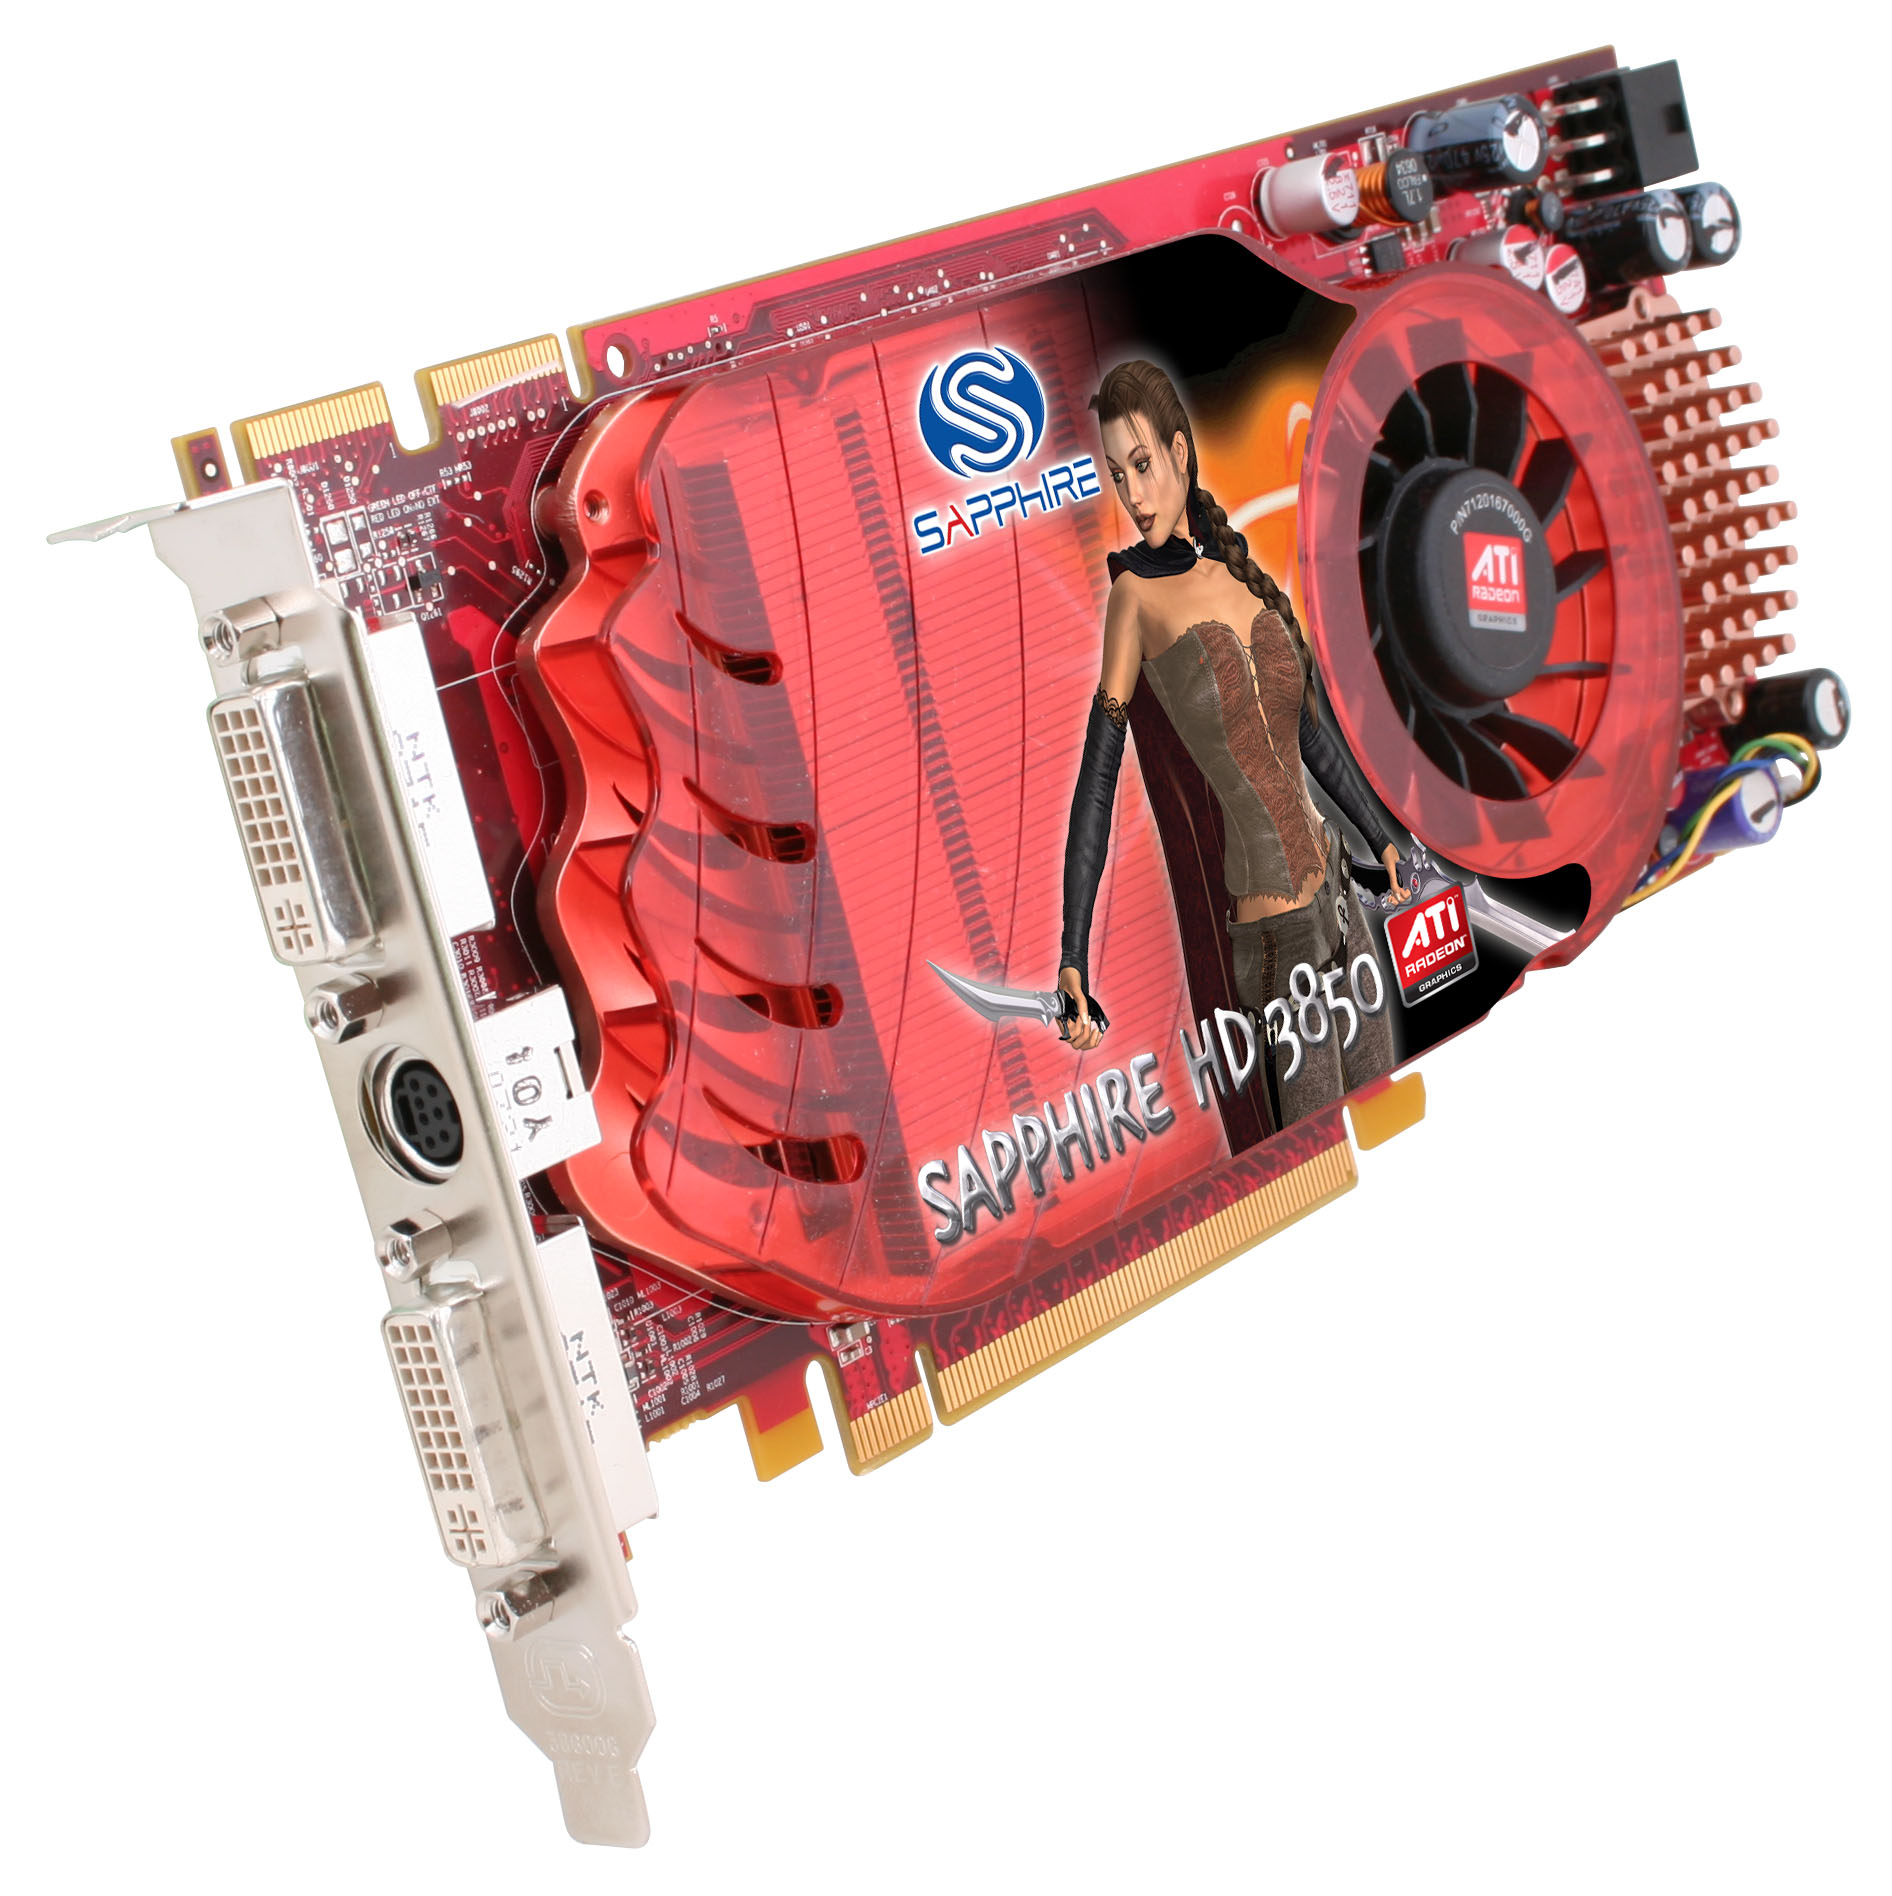 Ati radeon купить. AMD Radeon Sapphire 3850. Видеокарта Sapphire Radeon 3850.